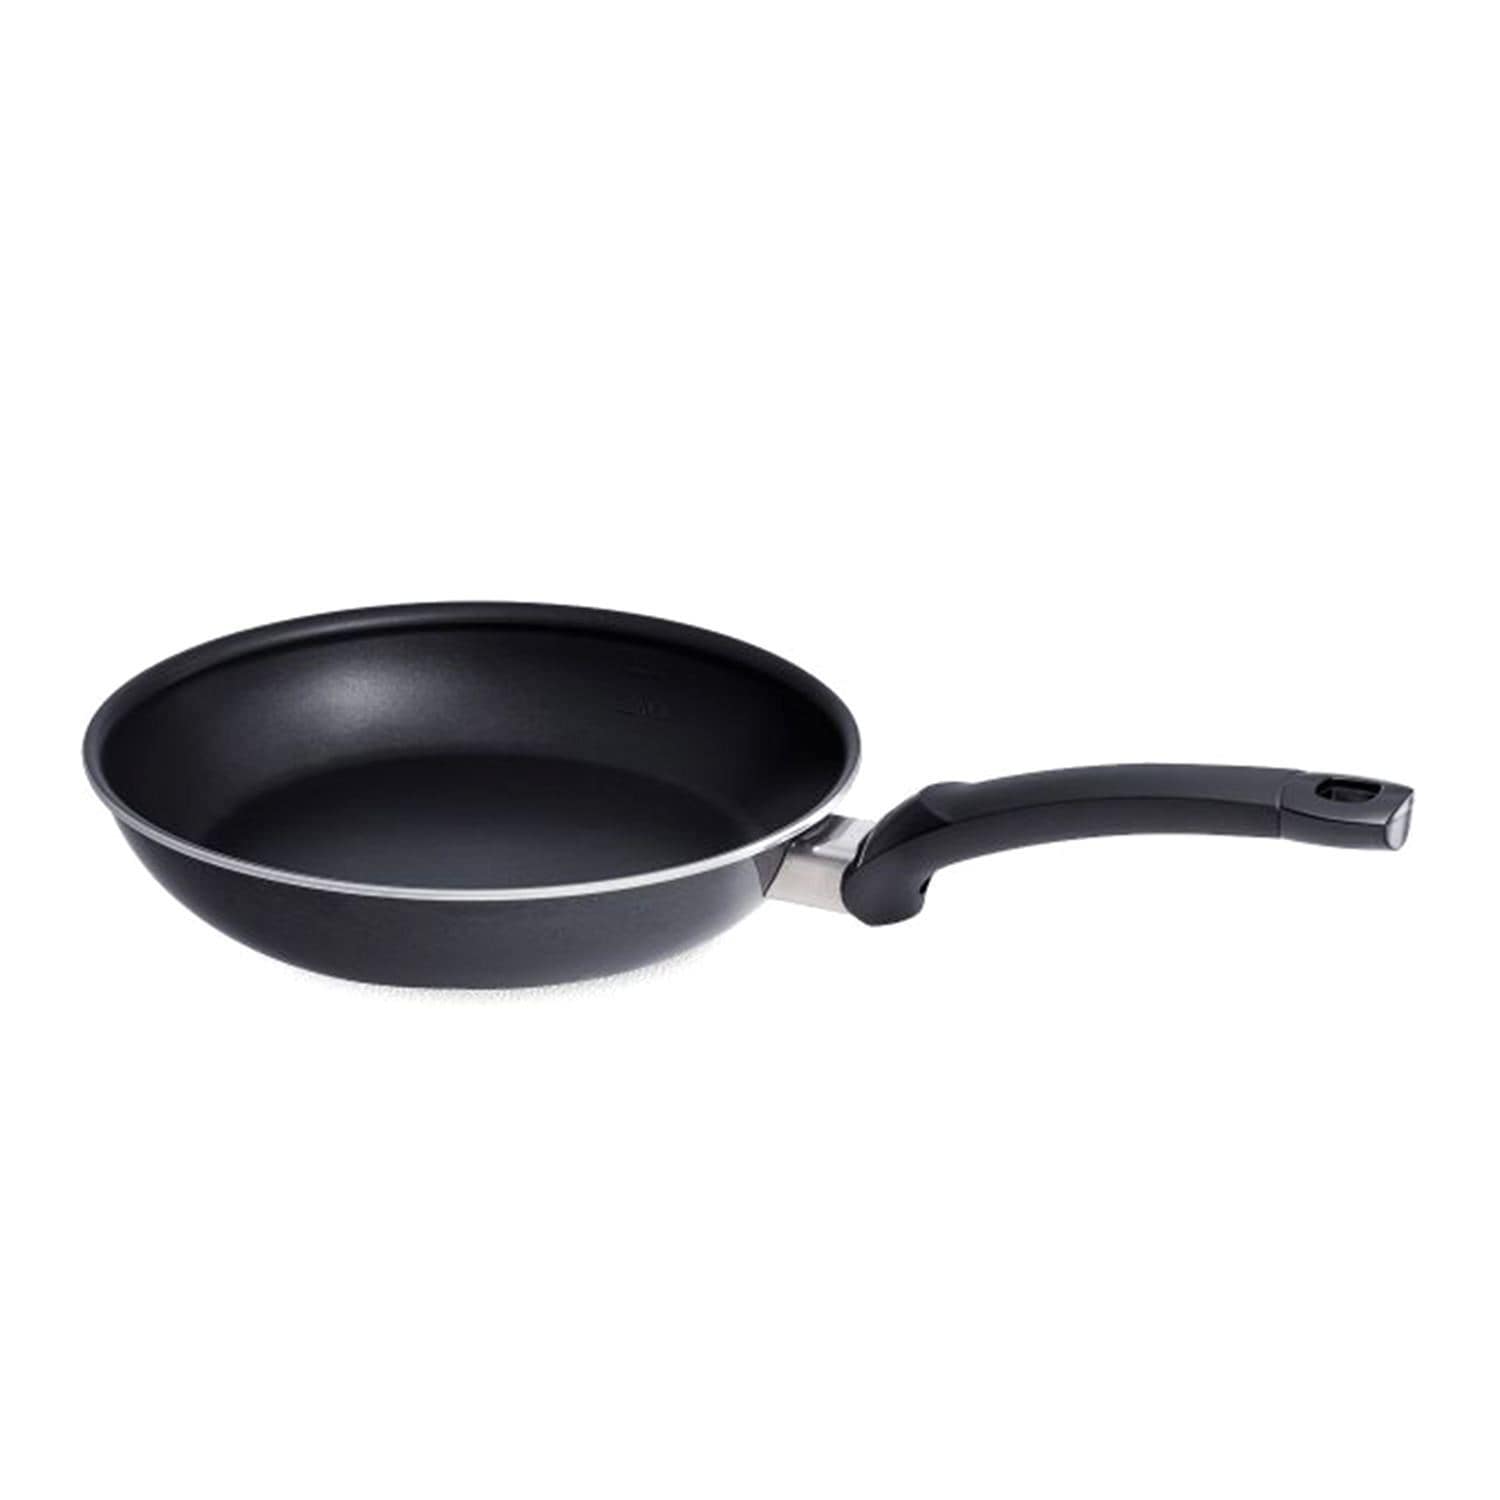 Fissler frying pans - Black - 146-303-28-100/0 - Jashanmal Home